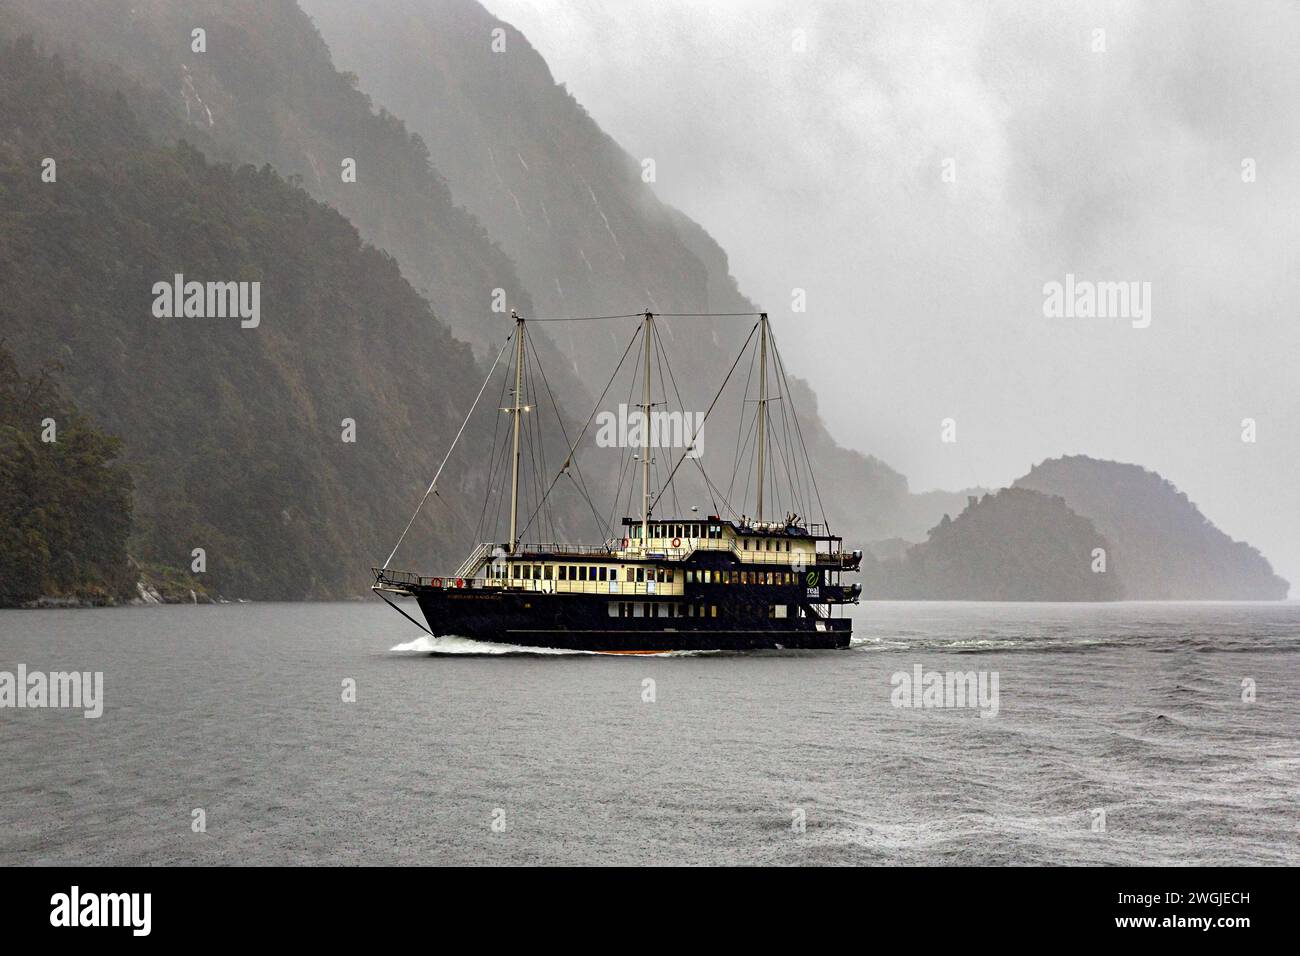 Tourist cruise ship making way on a rainy day in Doubtful Sound / Patea, Fiordland /Te Rua-o-te-Moko, New Zealand / Aotearoa, South Island /Te Waipoun Stock Photo